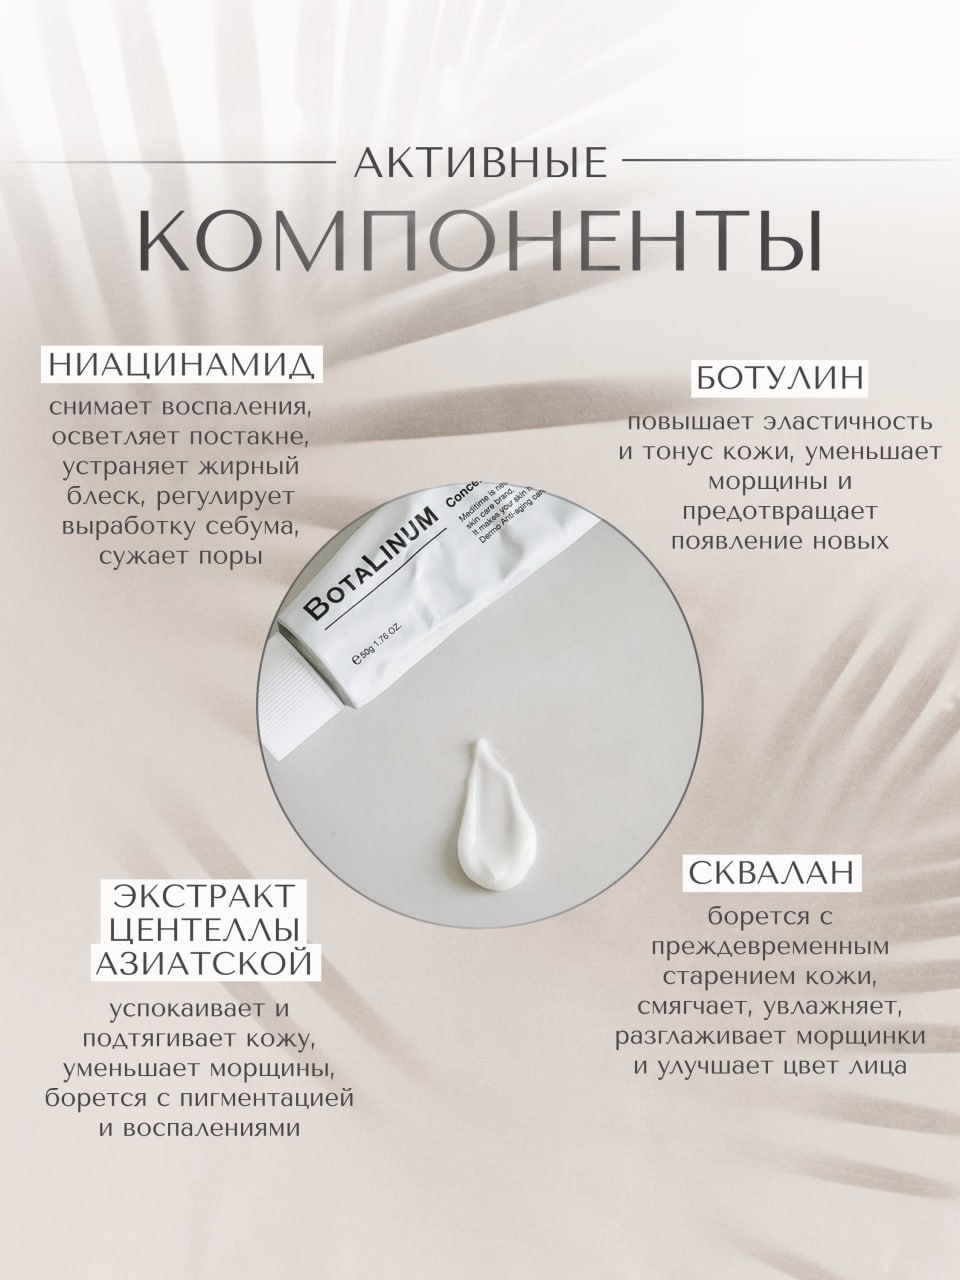 Крем с эффектом ботокса Meditime Botalinum Concentrate Care Cream (50 ml)